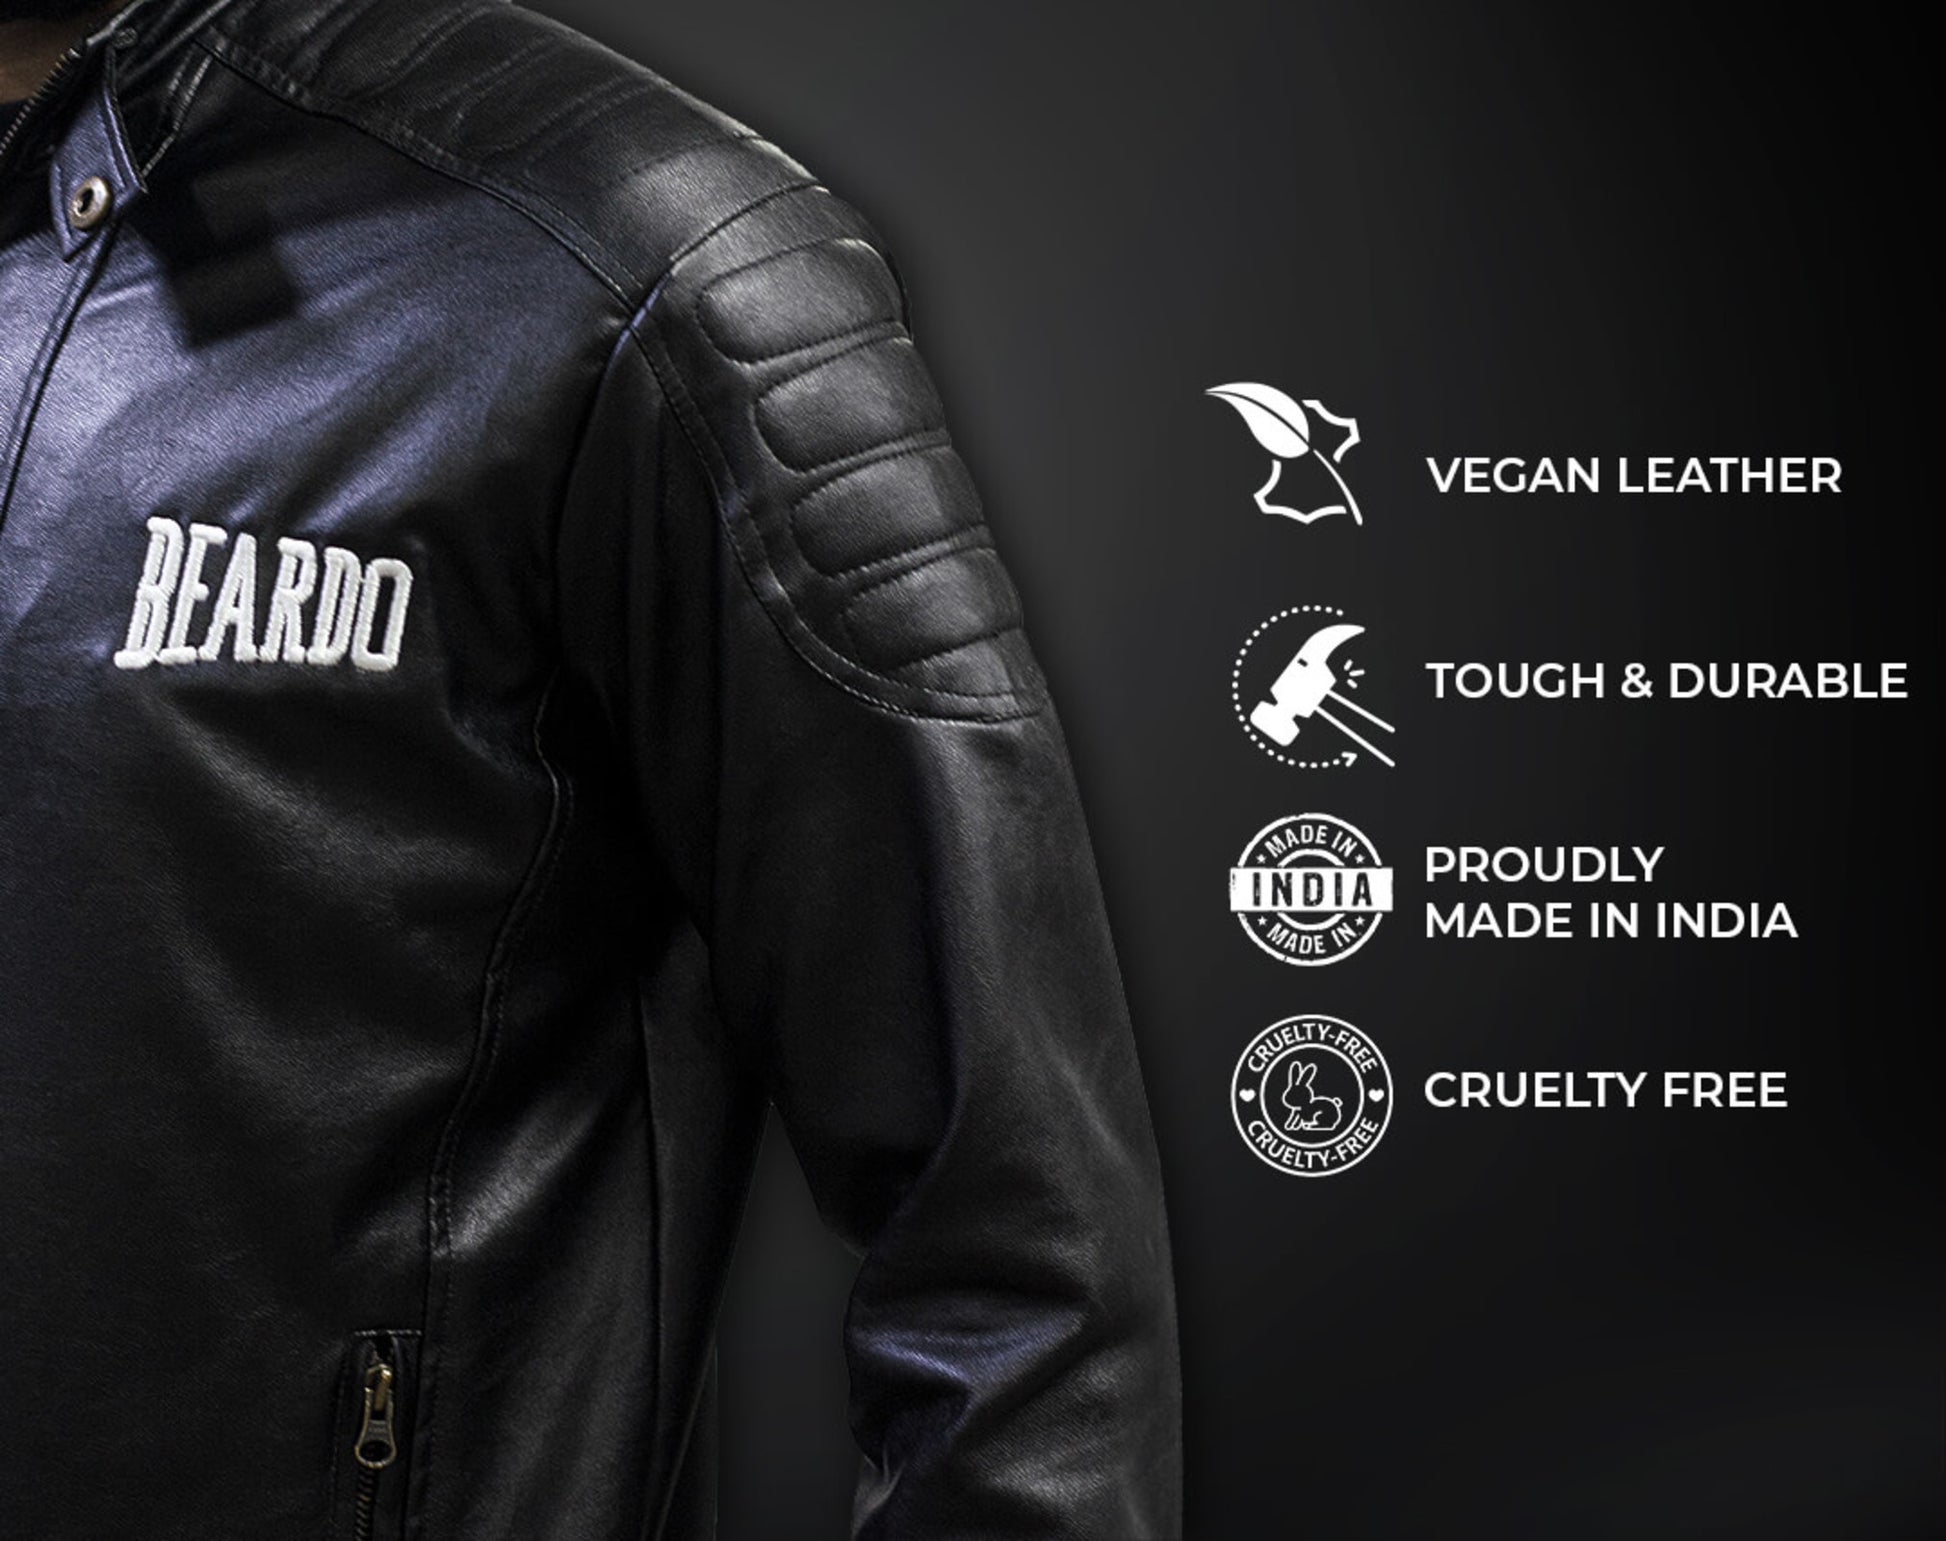 Beardo Vegan Leather Jacket (Black)